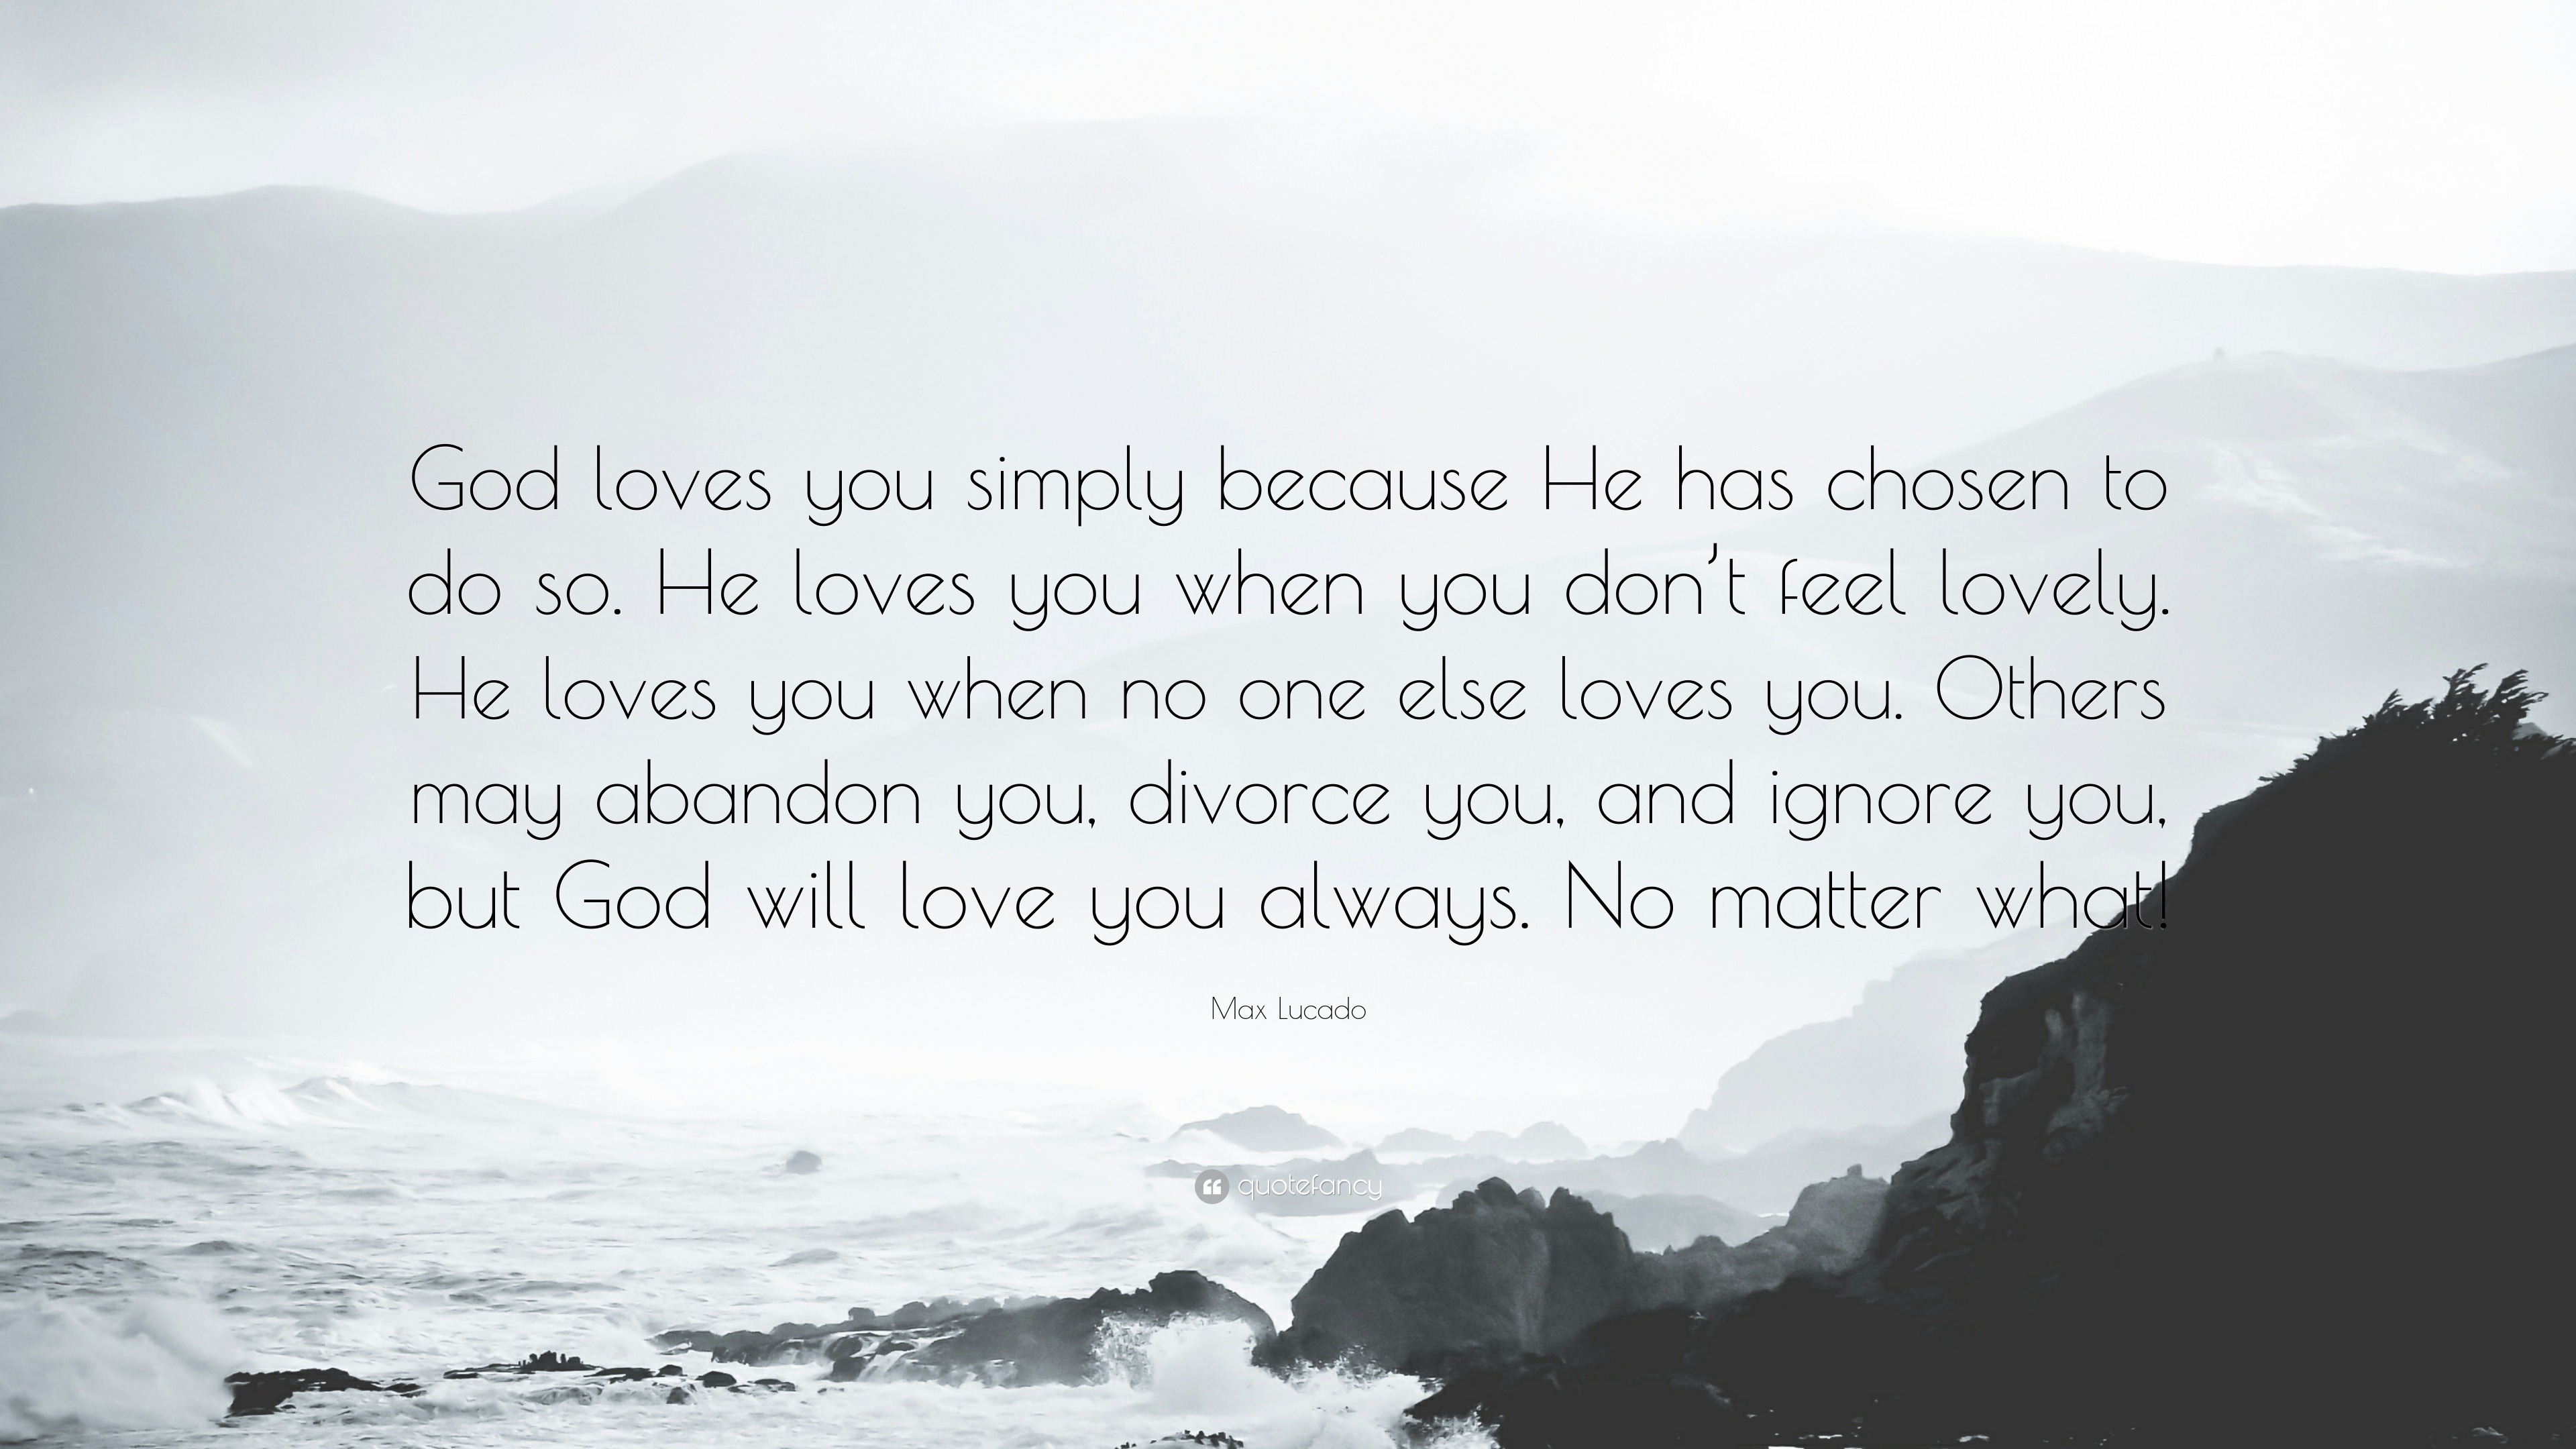 Max Lucado Quote “God loves you simply because He has chosen to do so